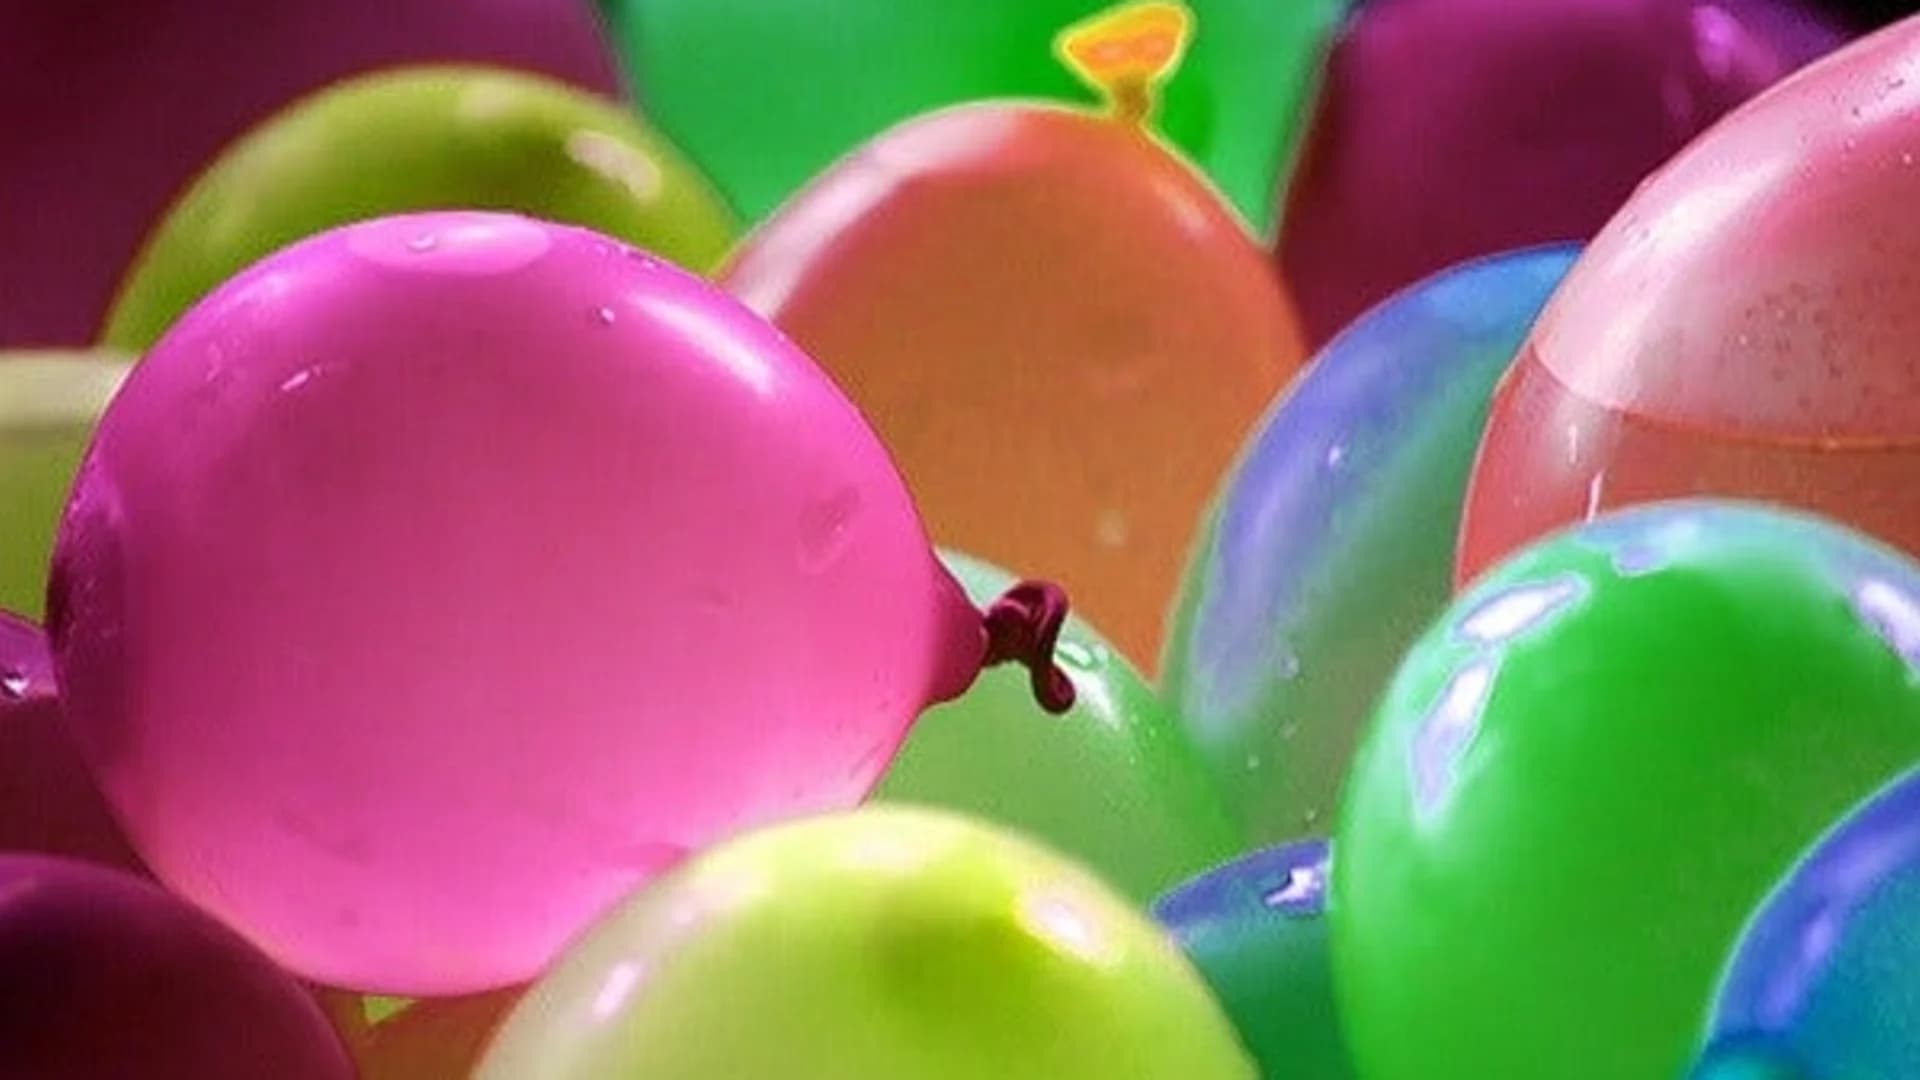 Water balloon slingshots top list of unsafe summer toys